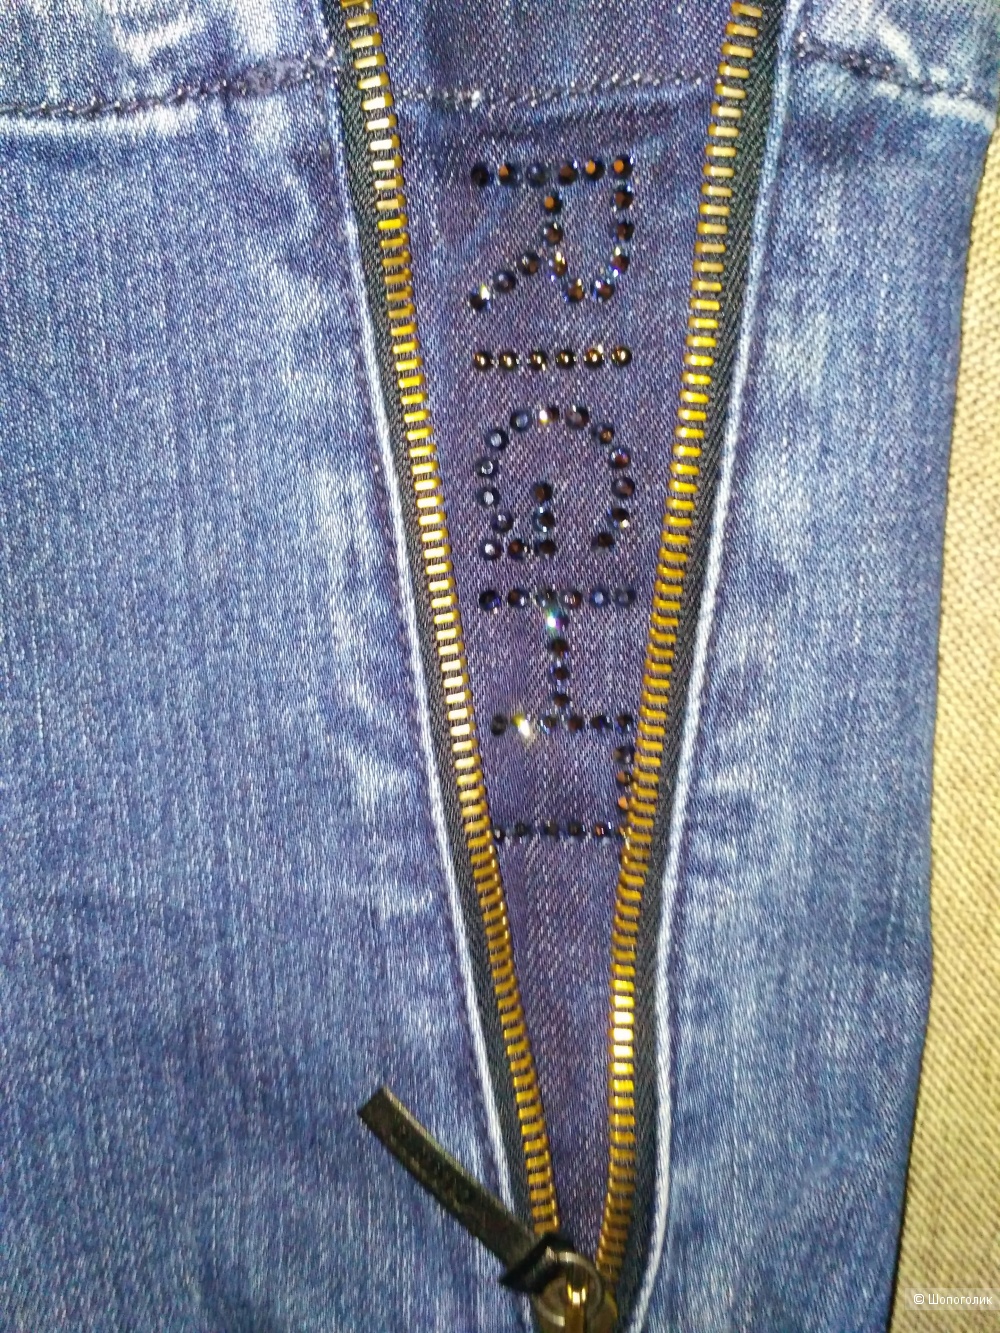 Cambio Jeans джинсы р. 46